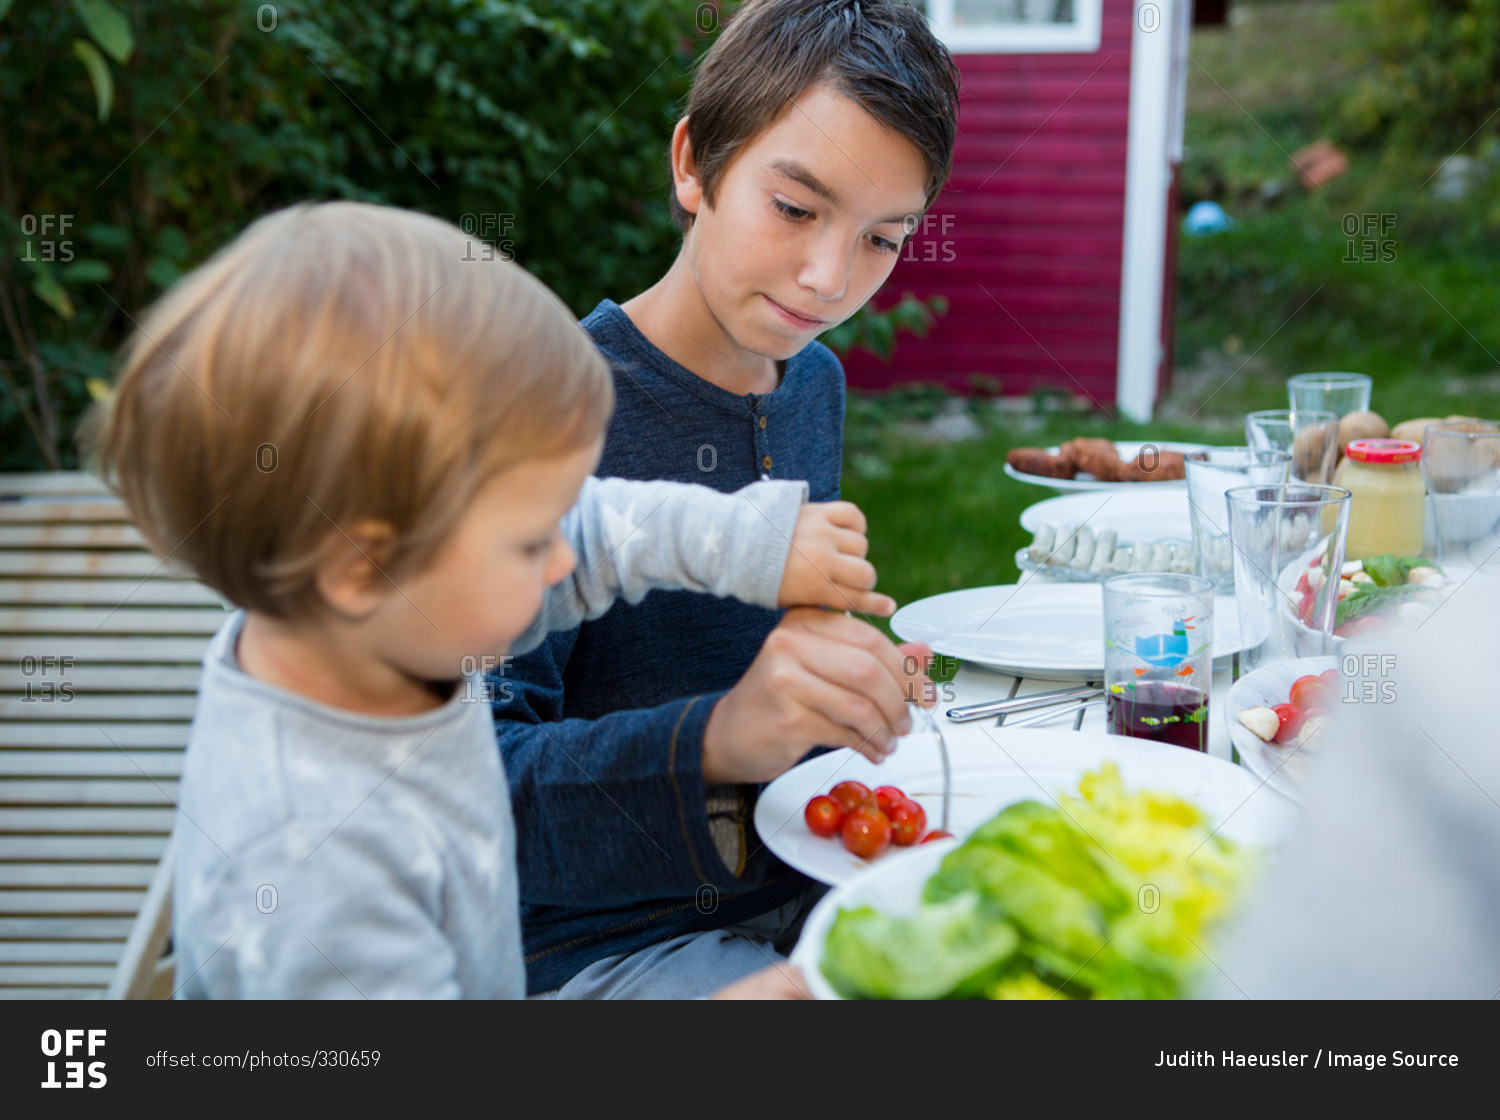 Teenage boy helping female toddler eat food at garden barbecue